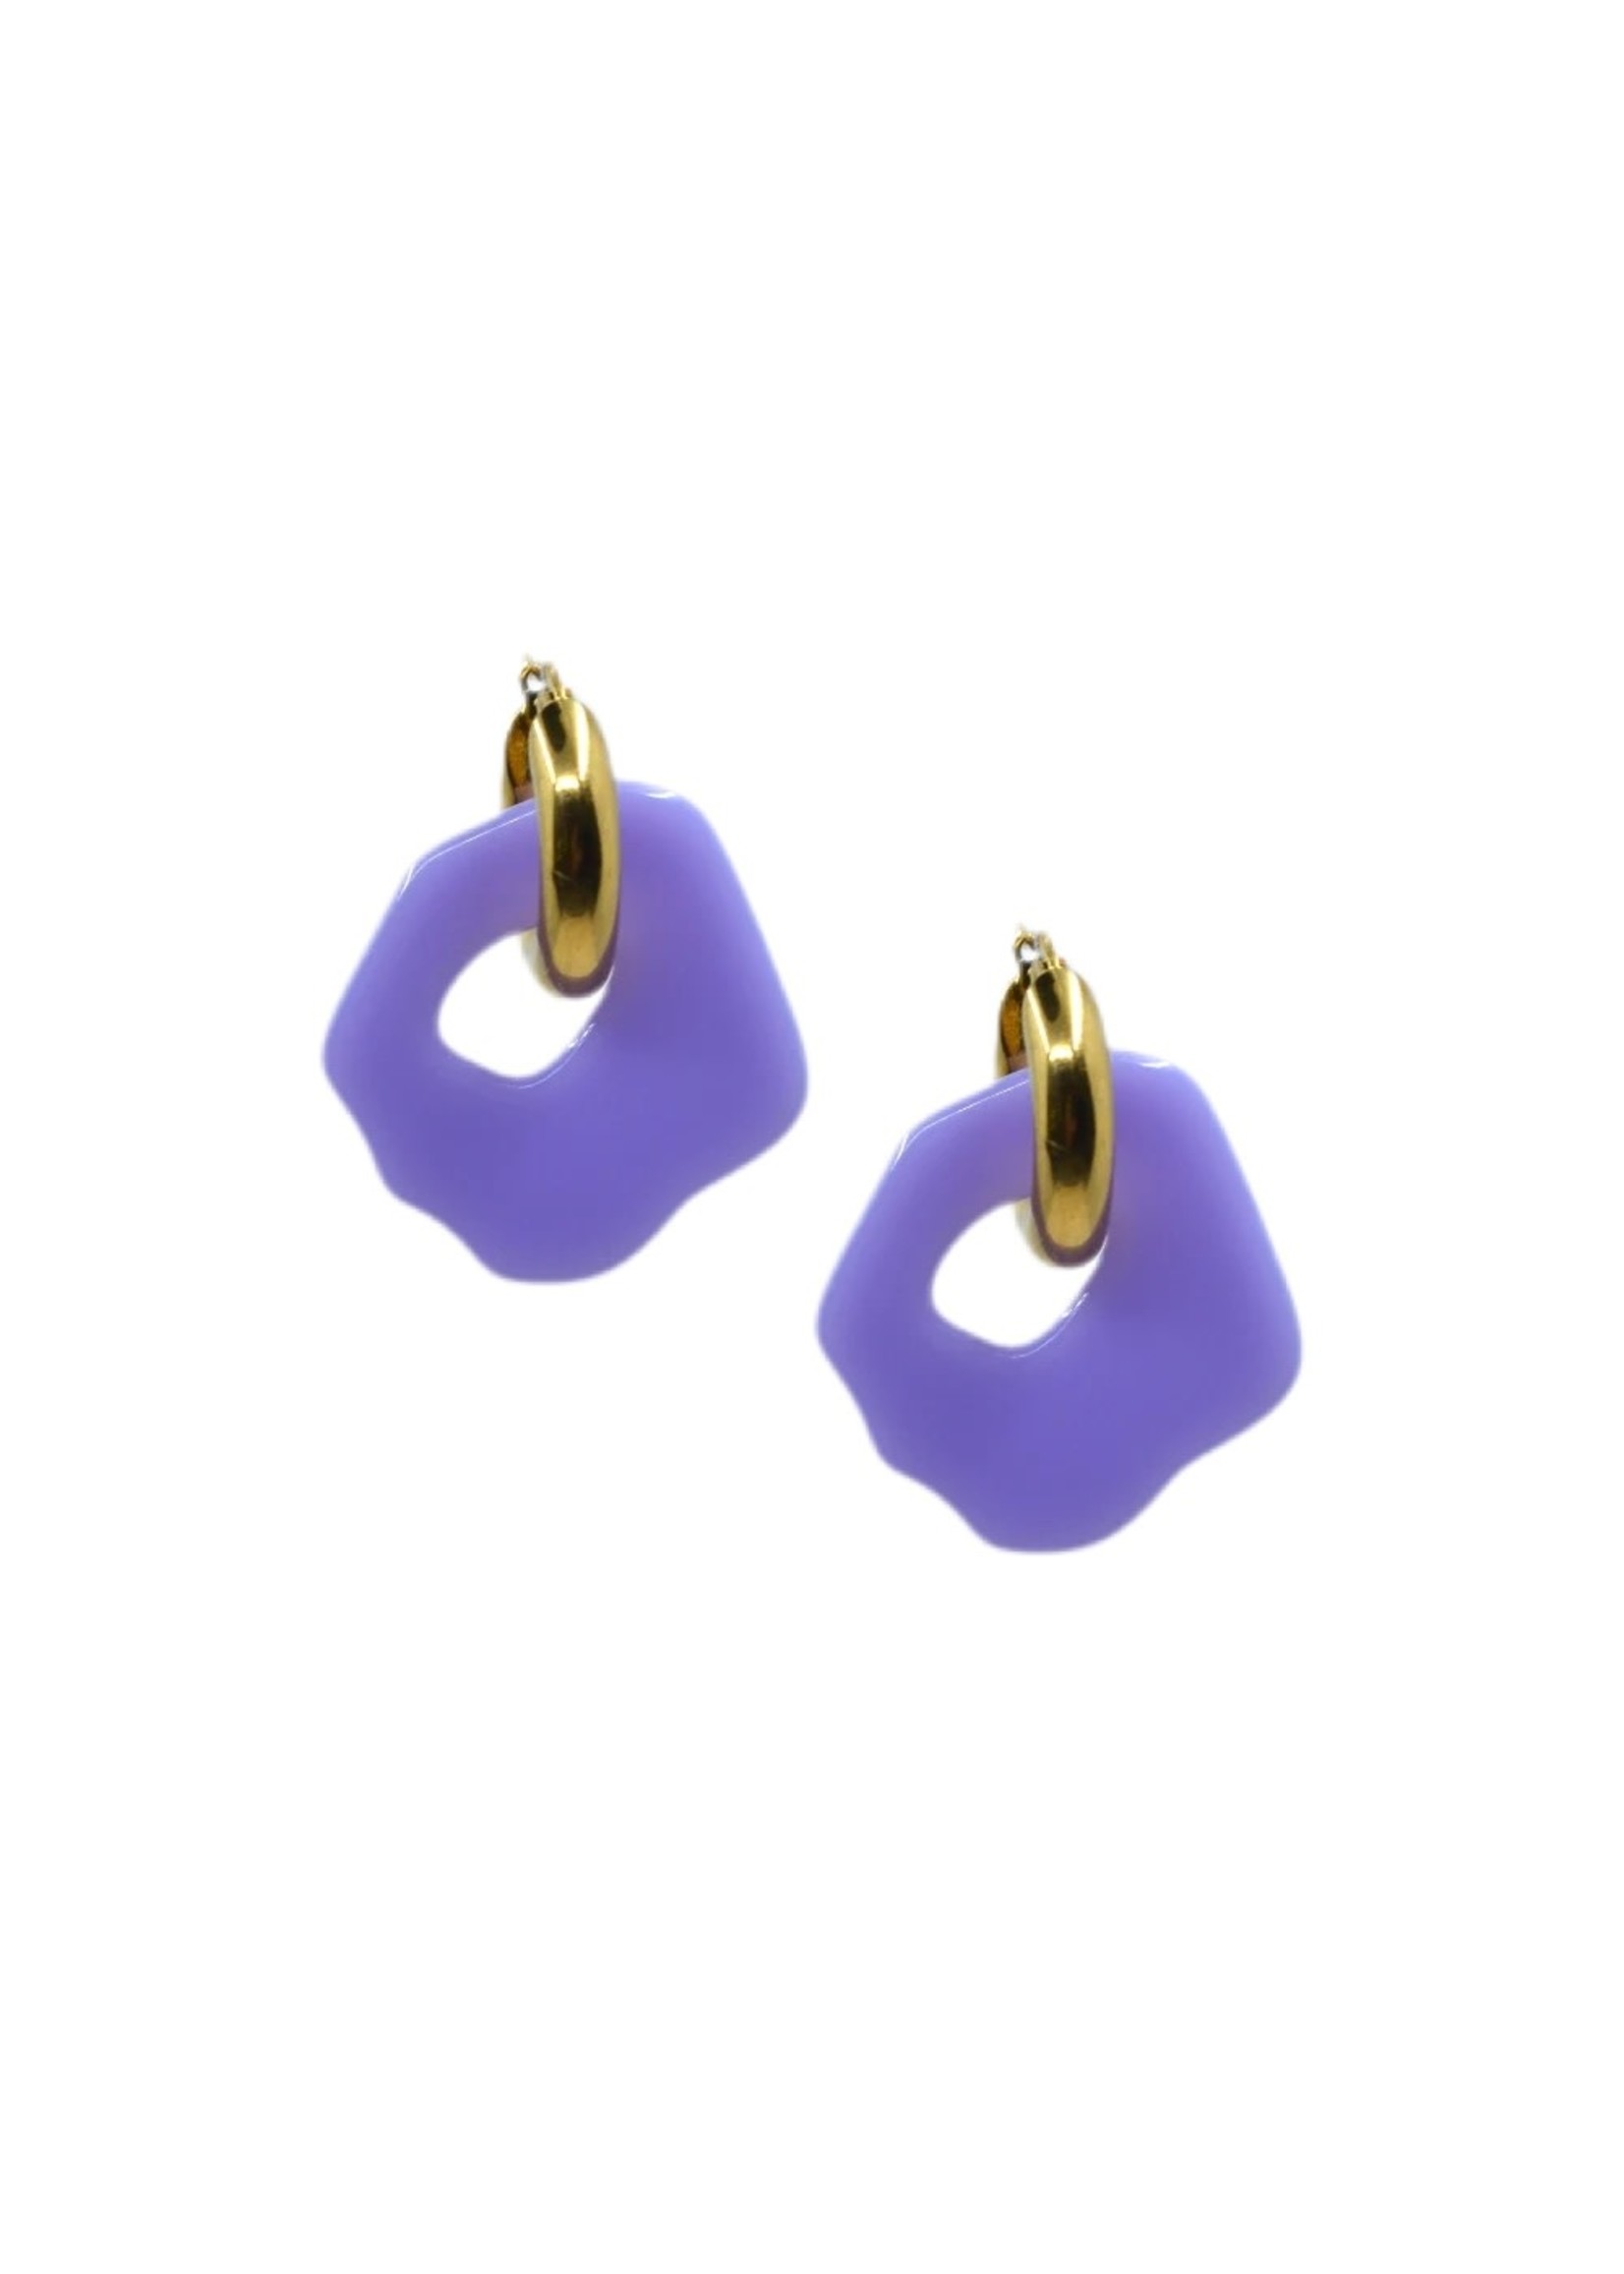 IMRUBY SUZE pair gold earrings